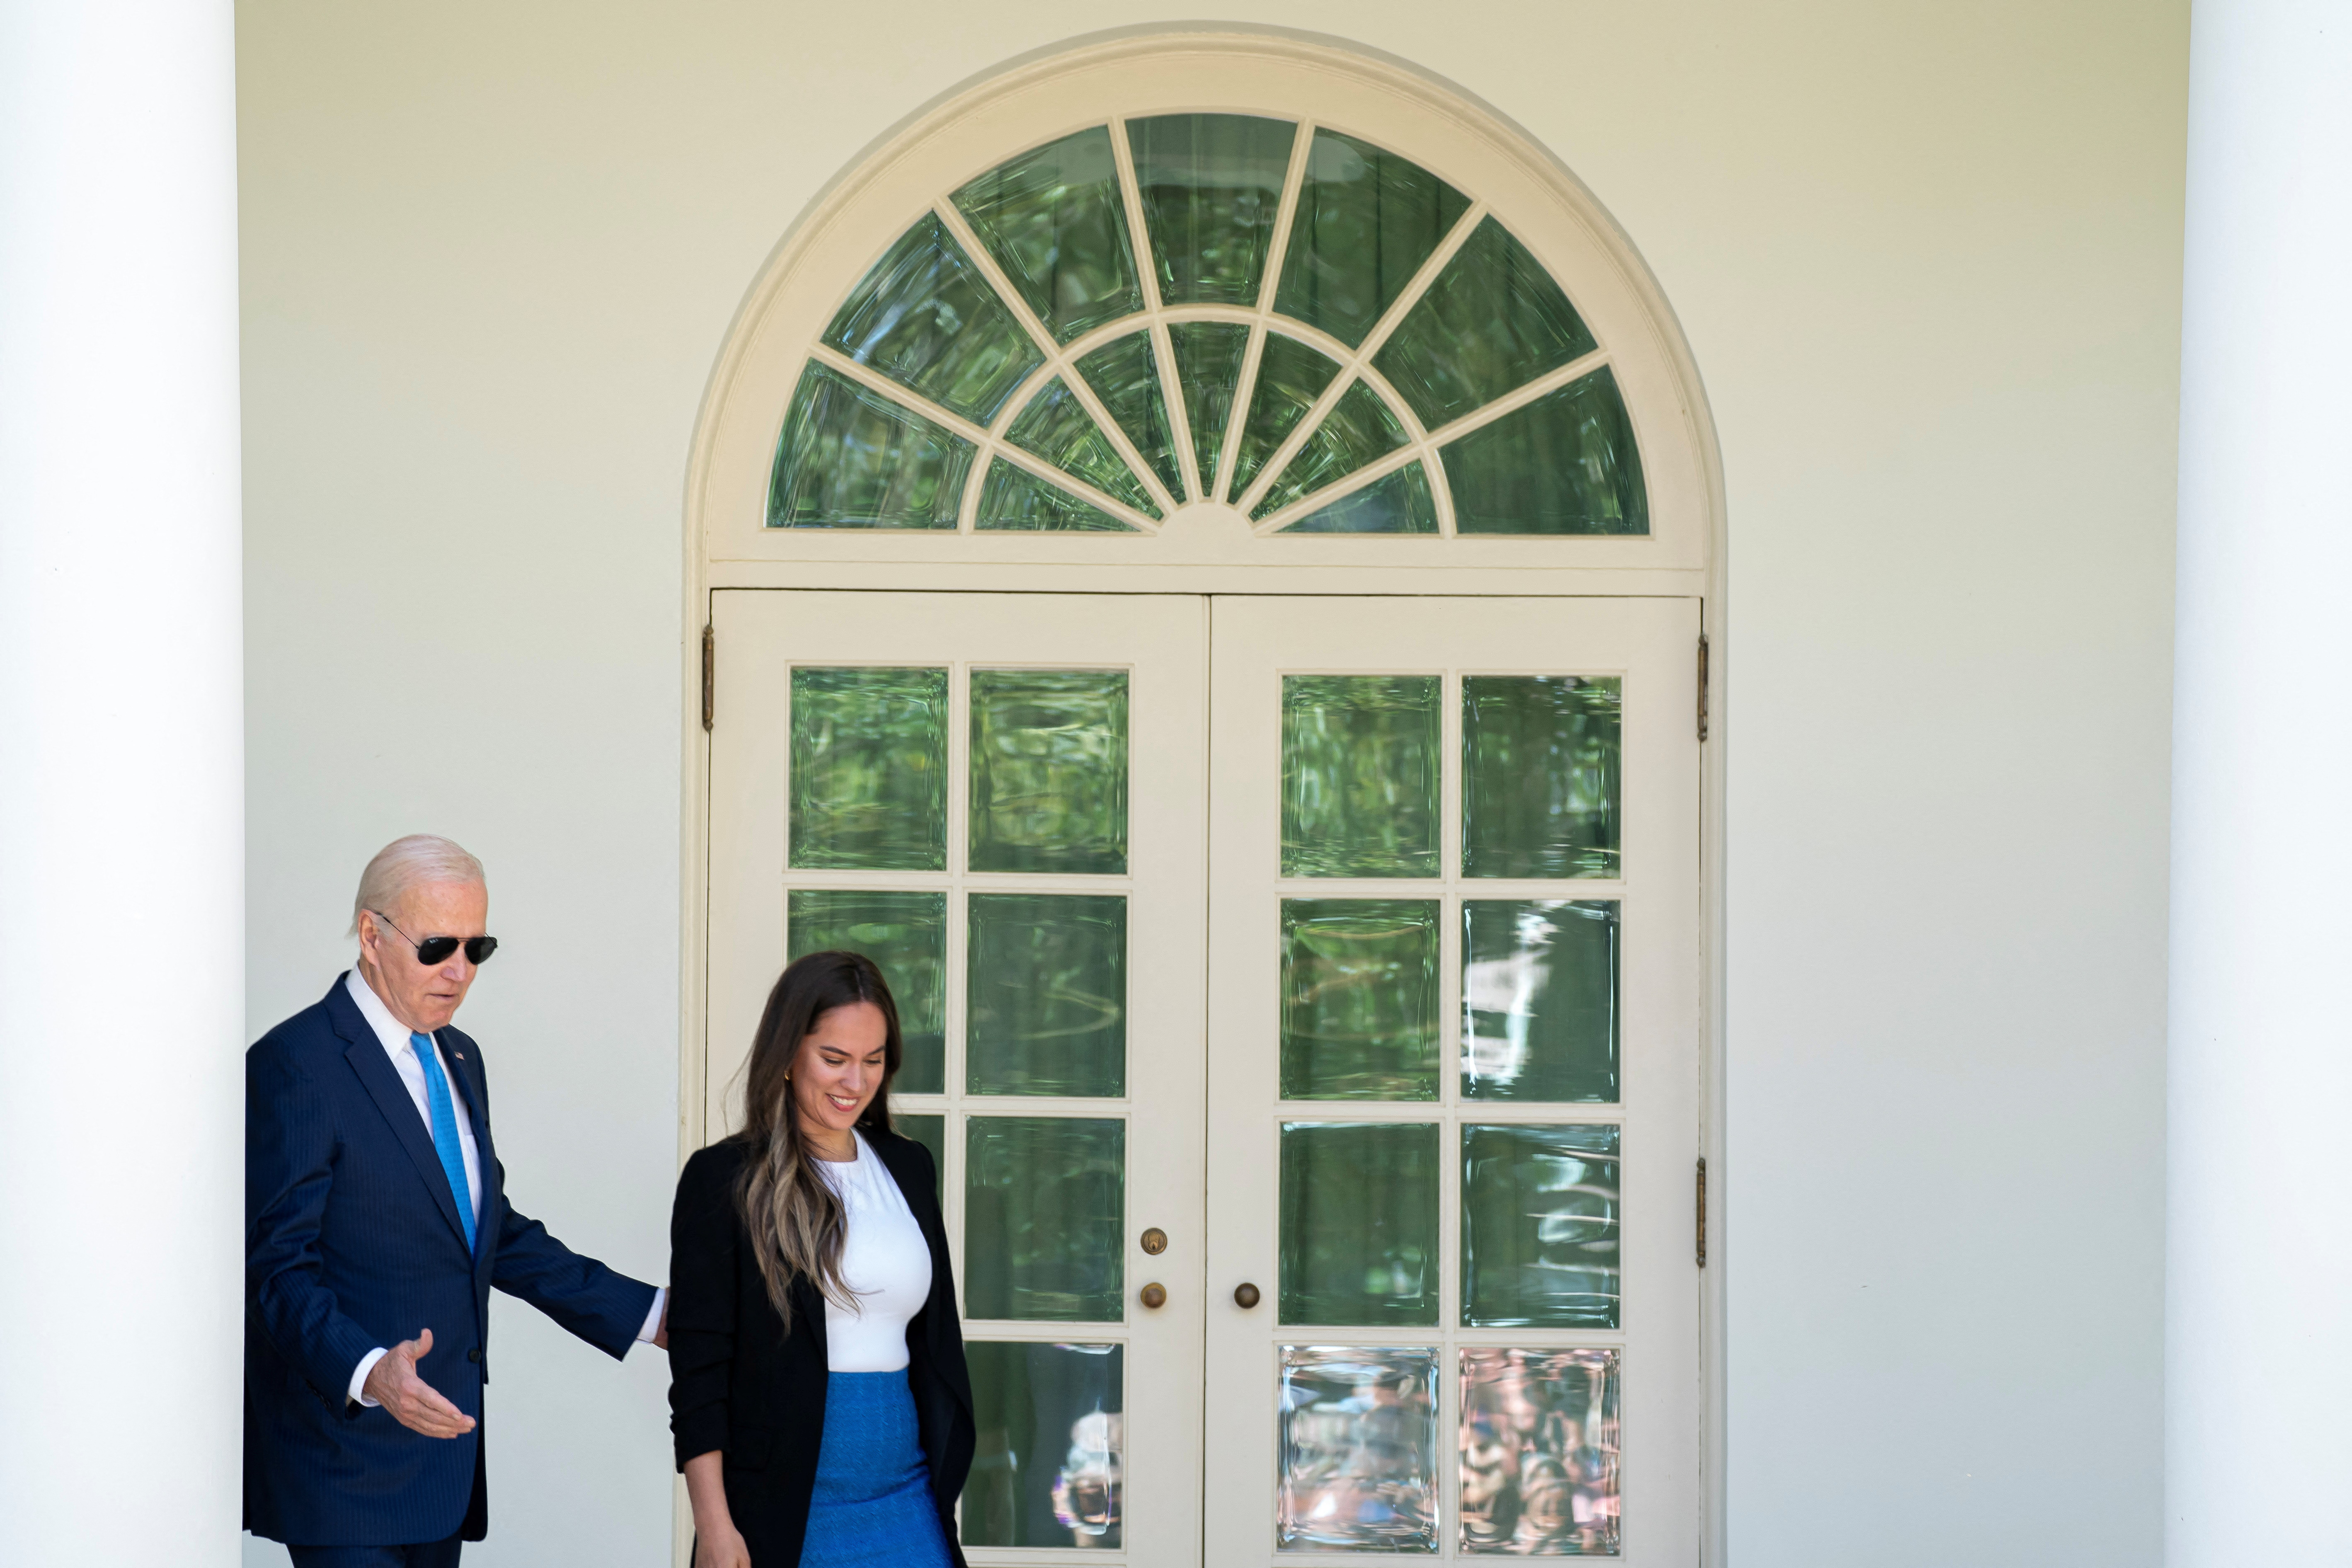 U.S. President Joe Biden, facing roadblocks in Congress, issues executive order on childcare and eldercare